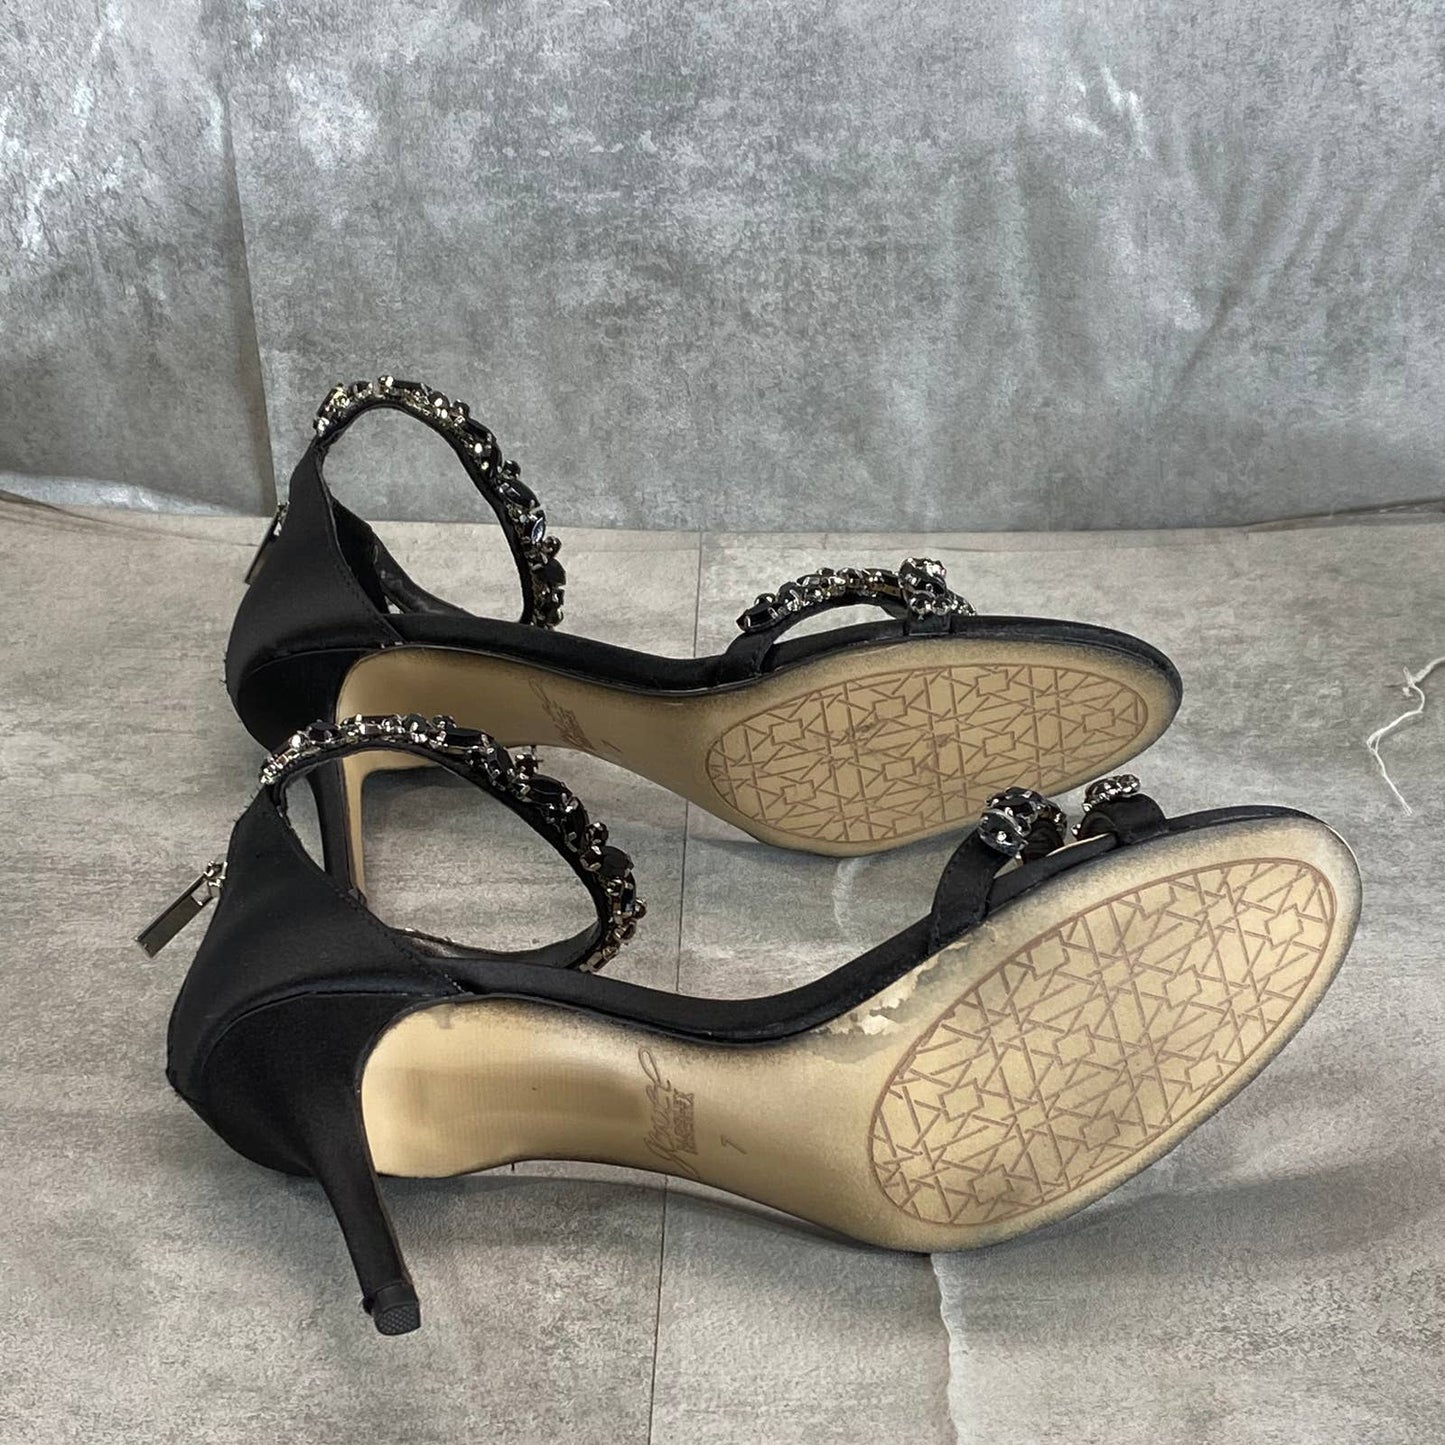 JEWEL BADGLEY MISCHKA Women's Black Caroline Embellished Evening Sandals SZ 7